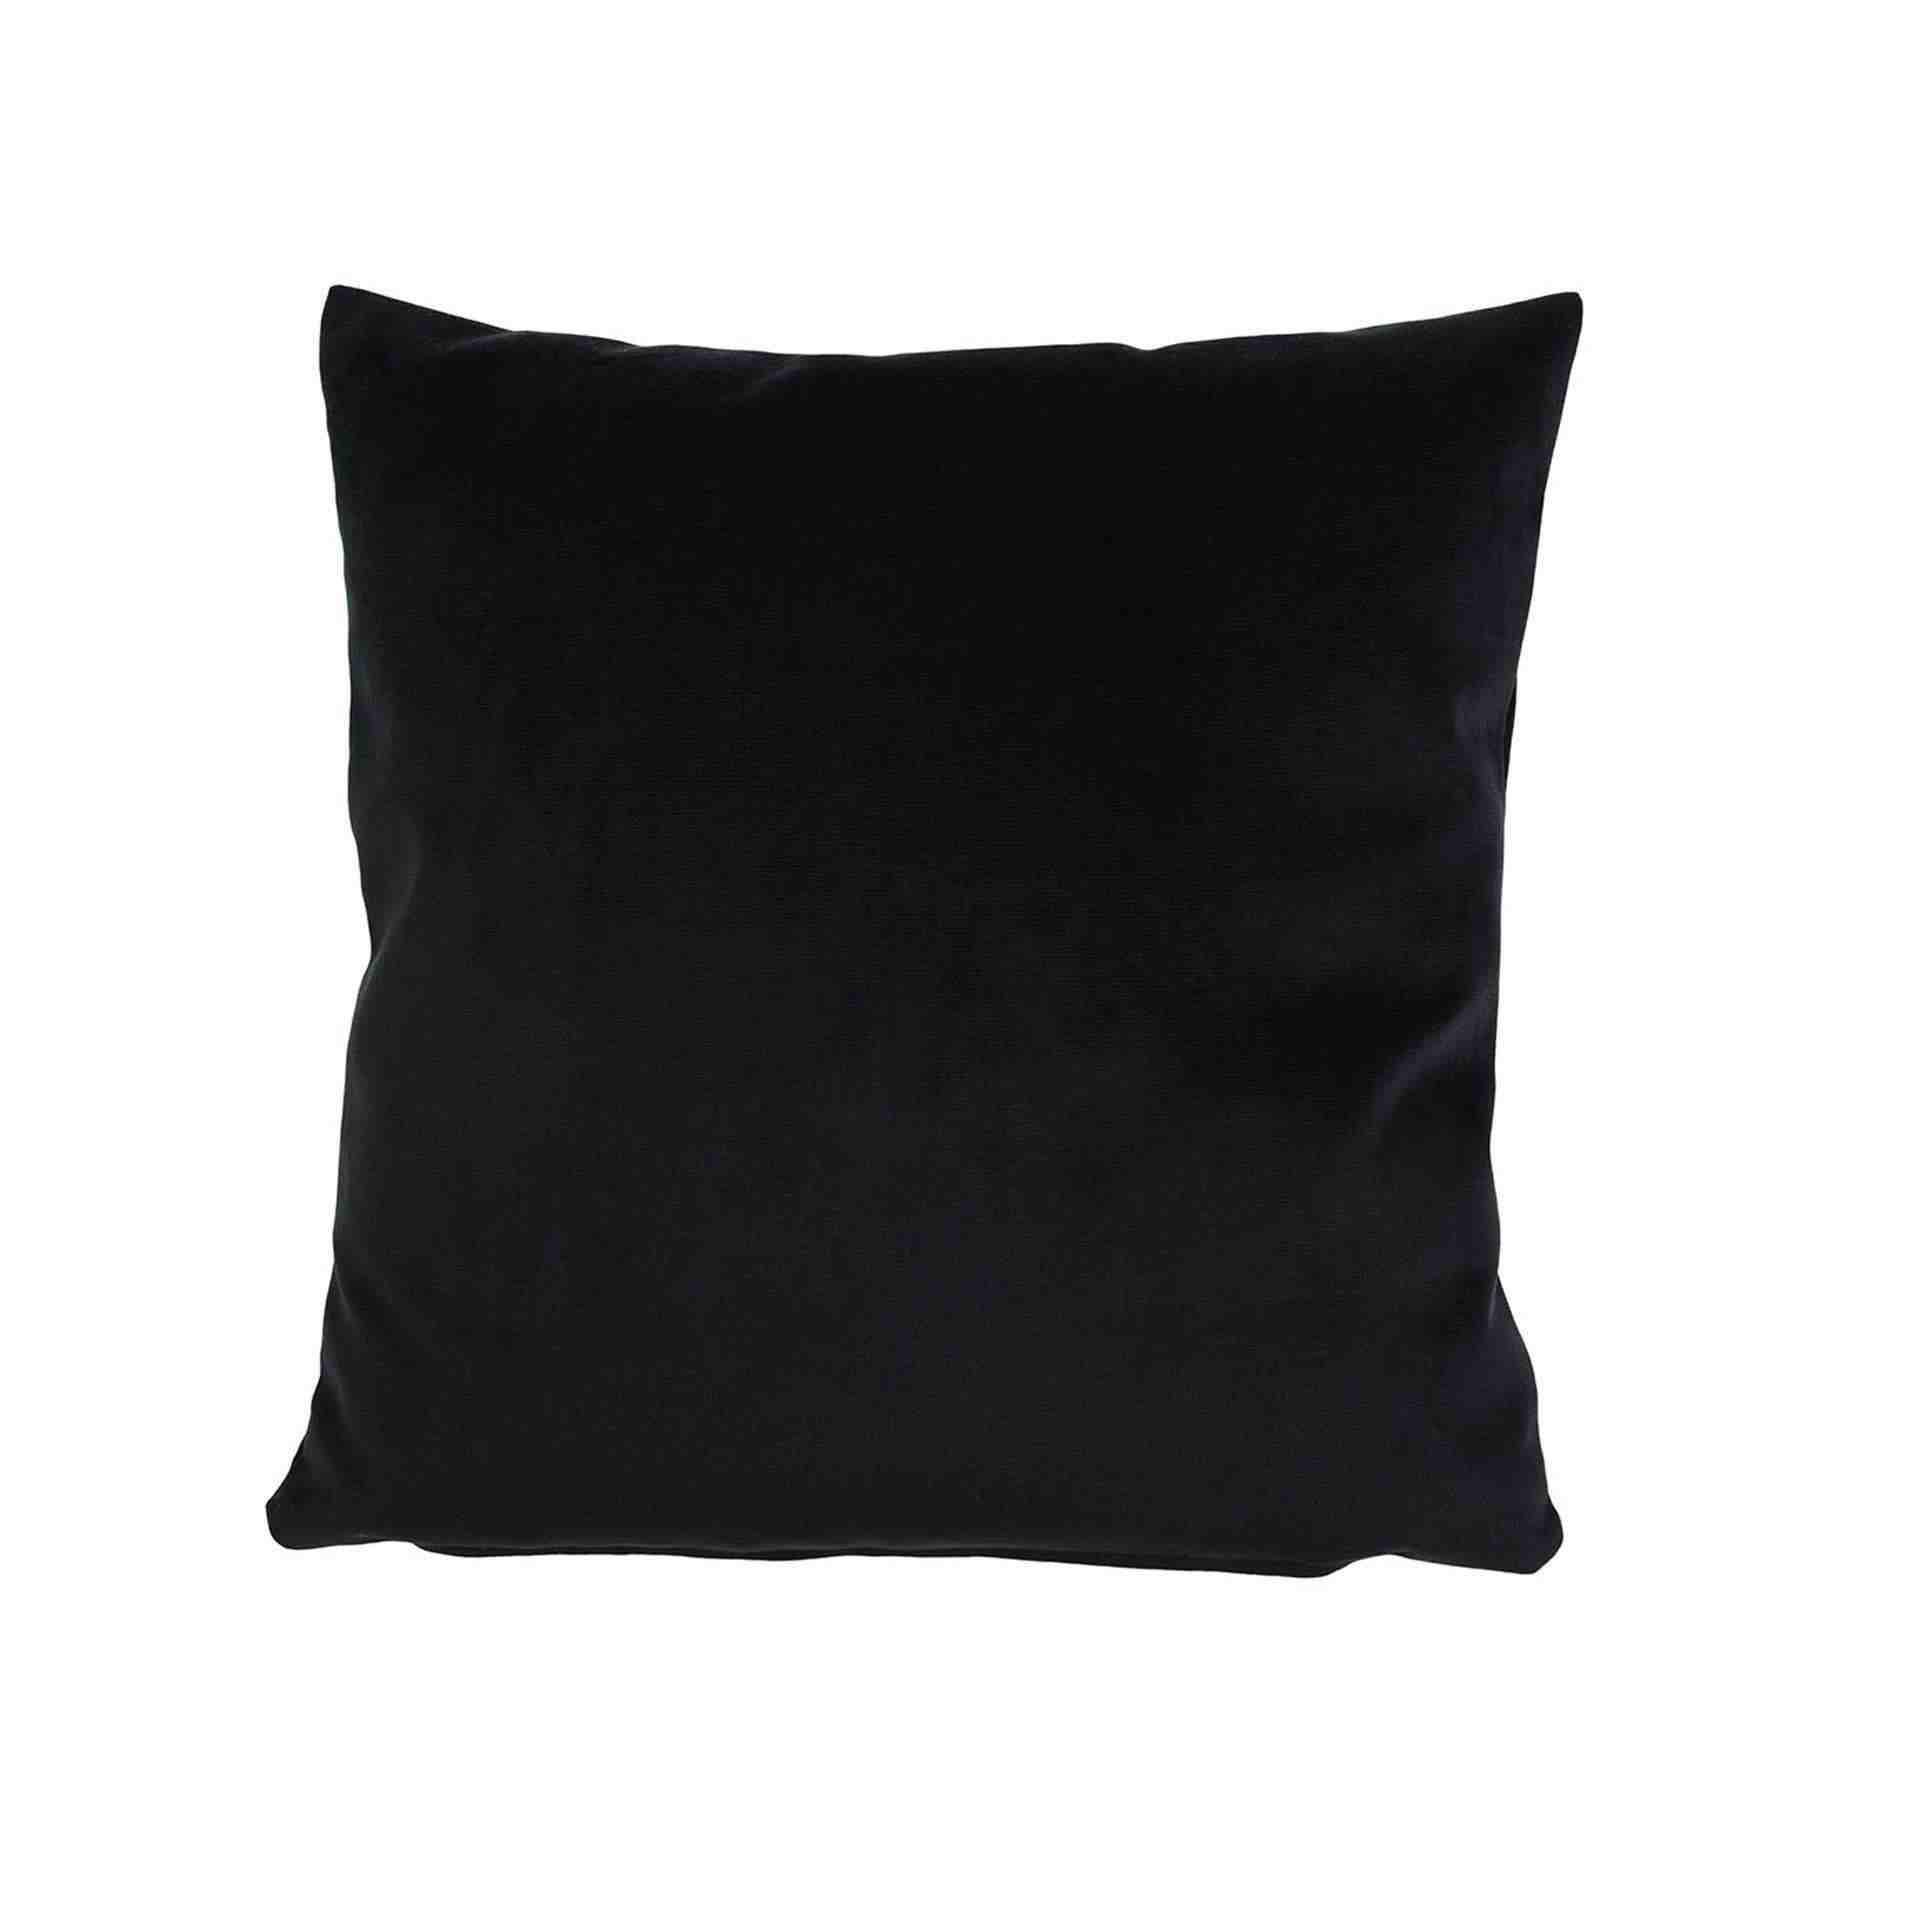 Kissenhülle - mit Reißverschluss - Serie DUVAL - schwarz - Abm. 60 x 60 cm - Polyester - 85694-99-6060-D